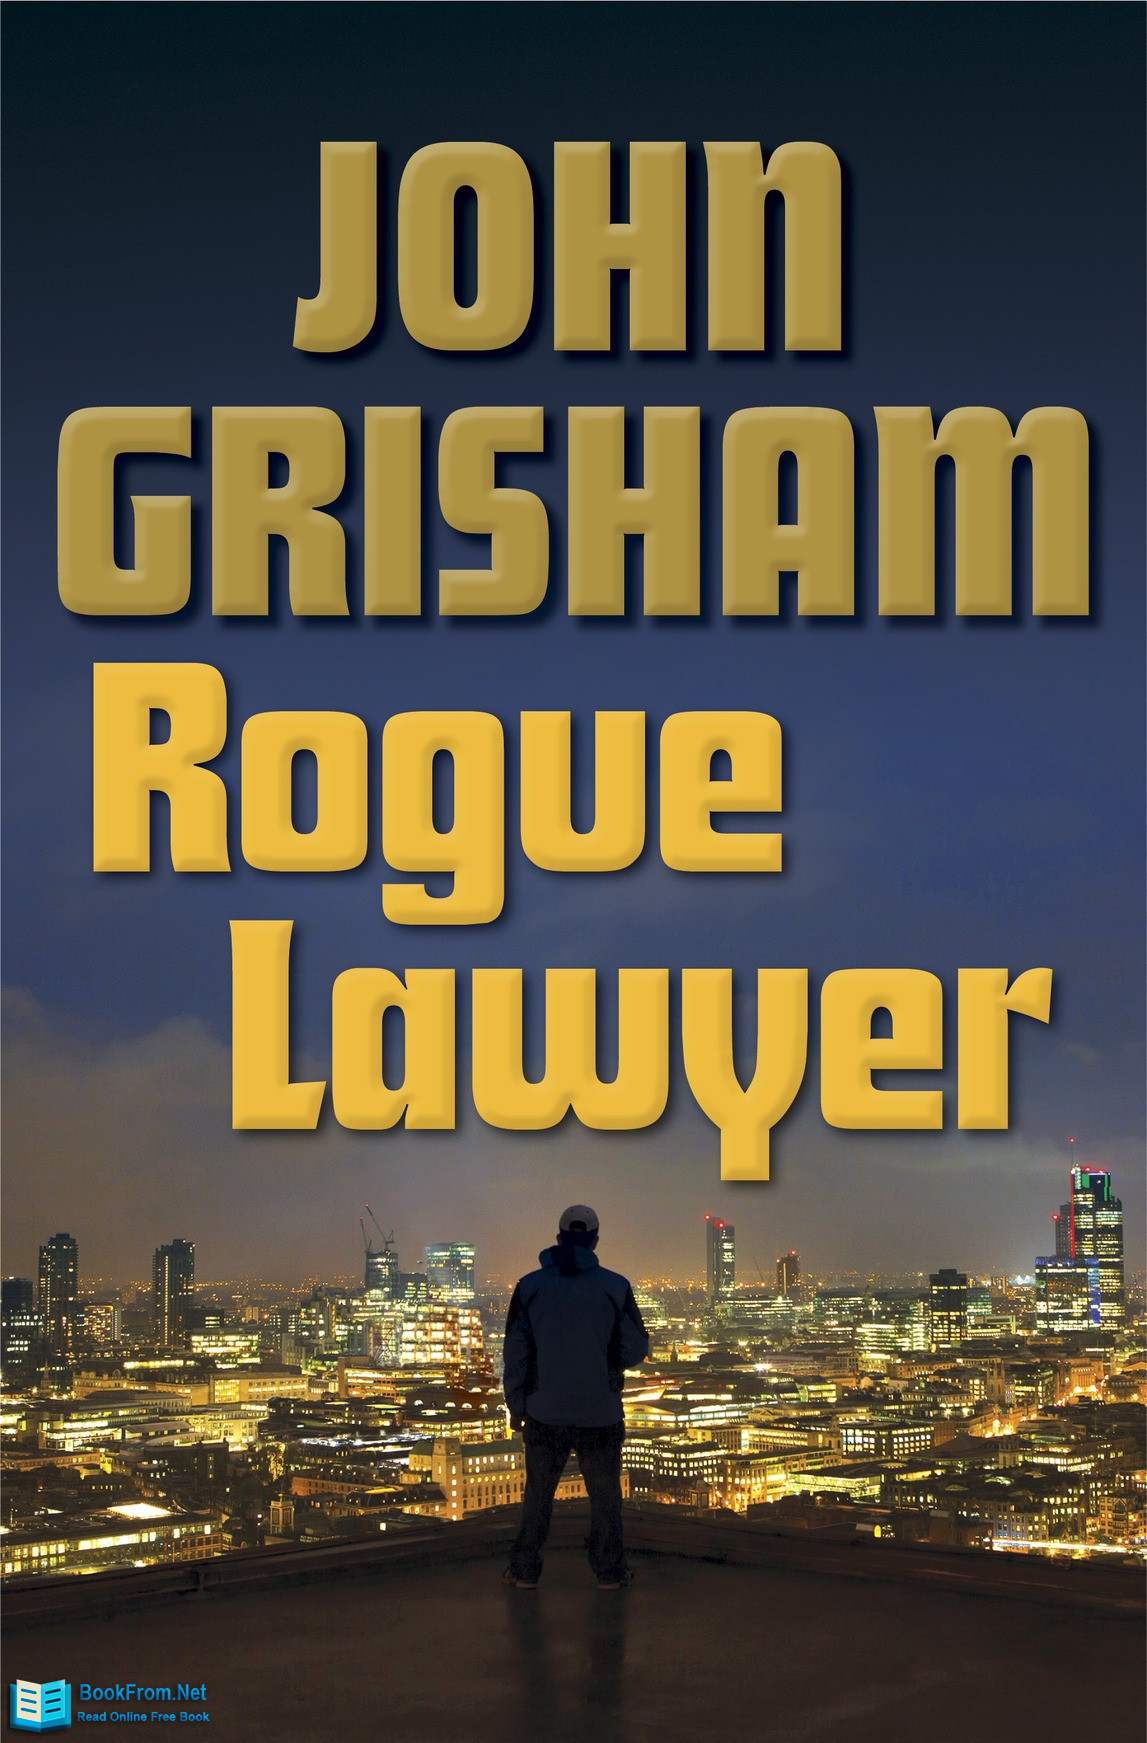 read john grisham books online